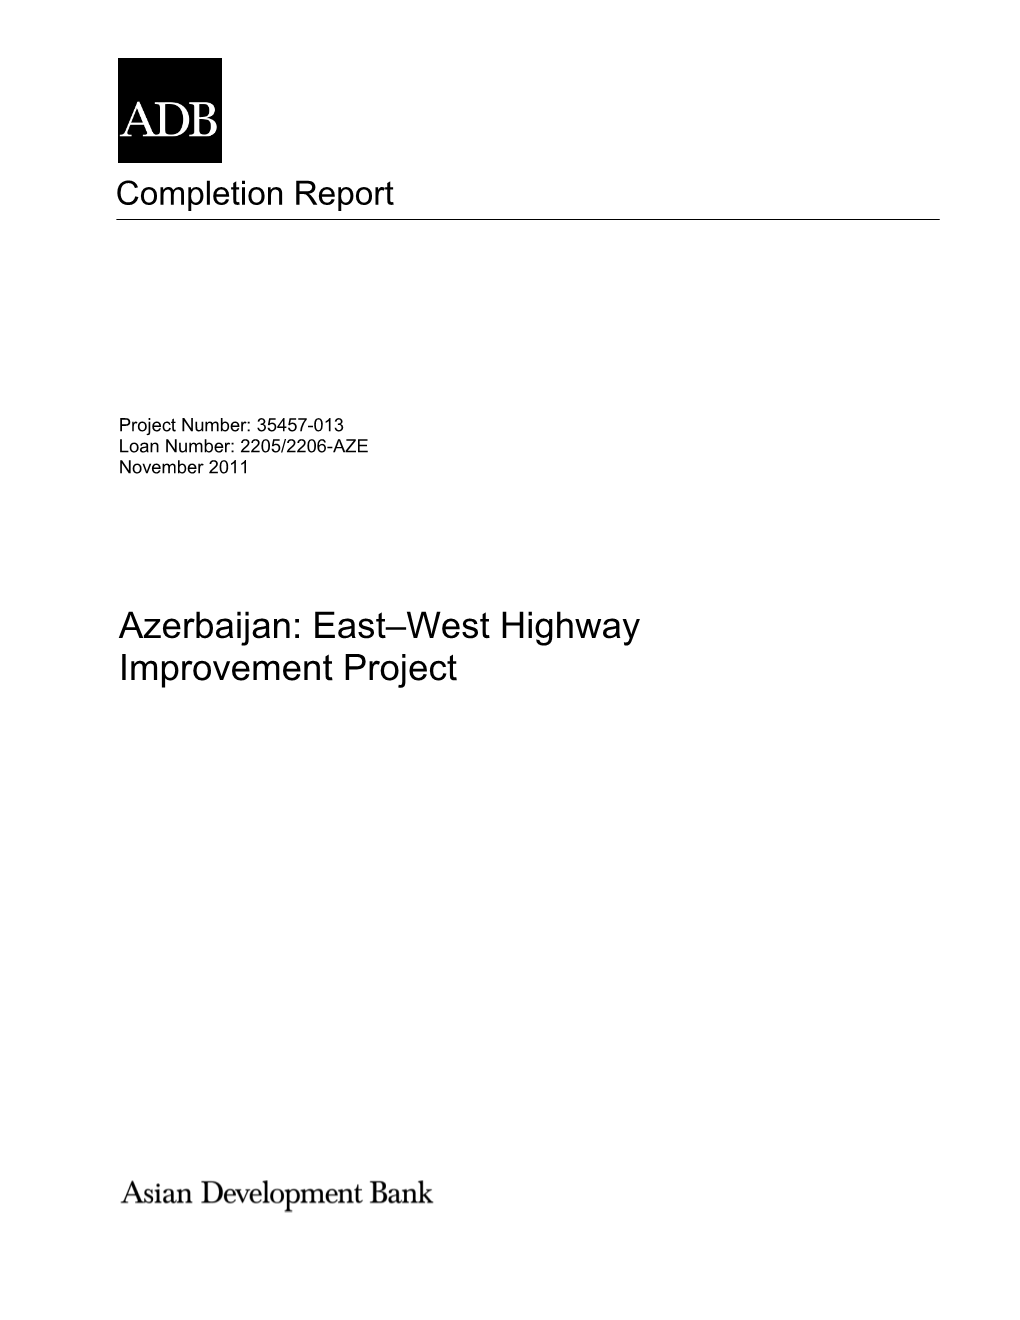 Azerbaijan: East–West Highway Improvement Project